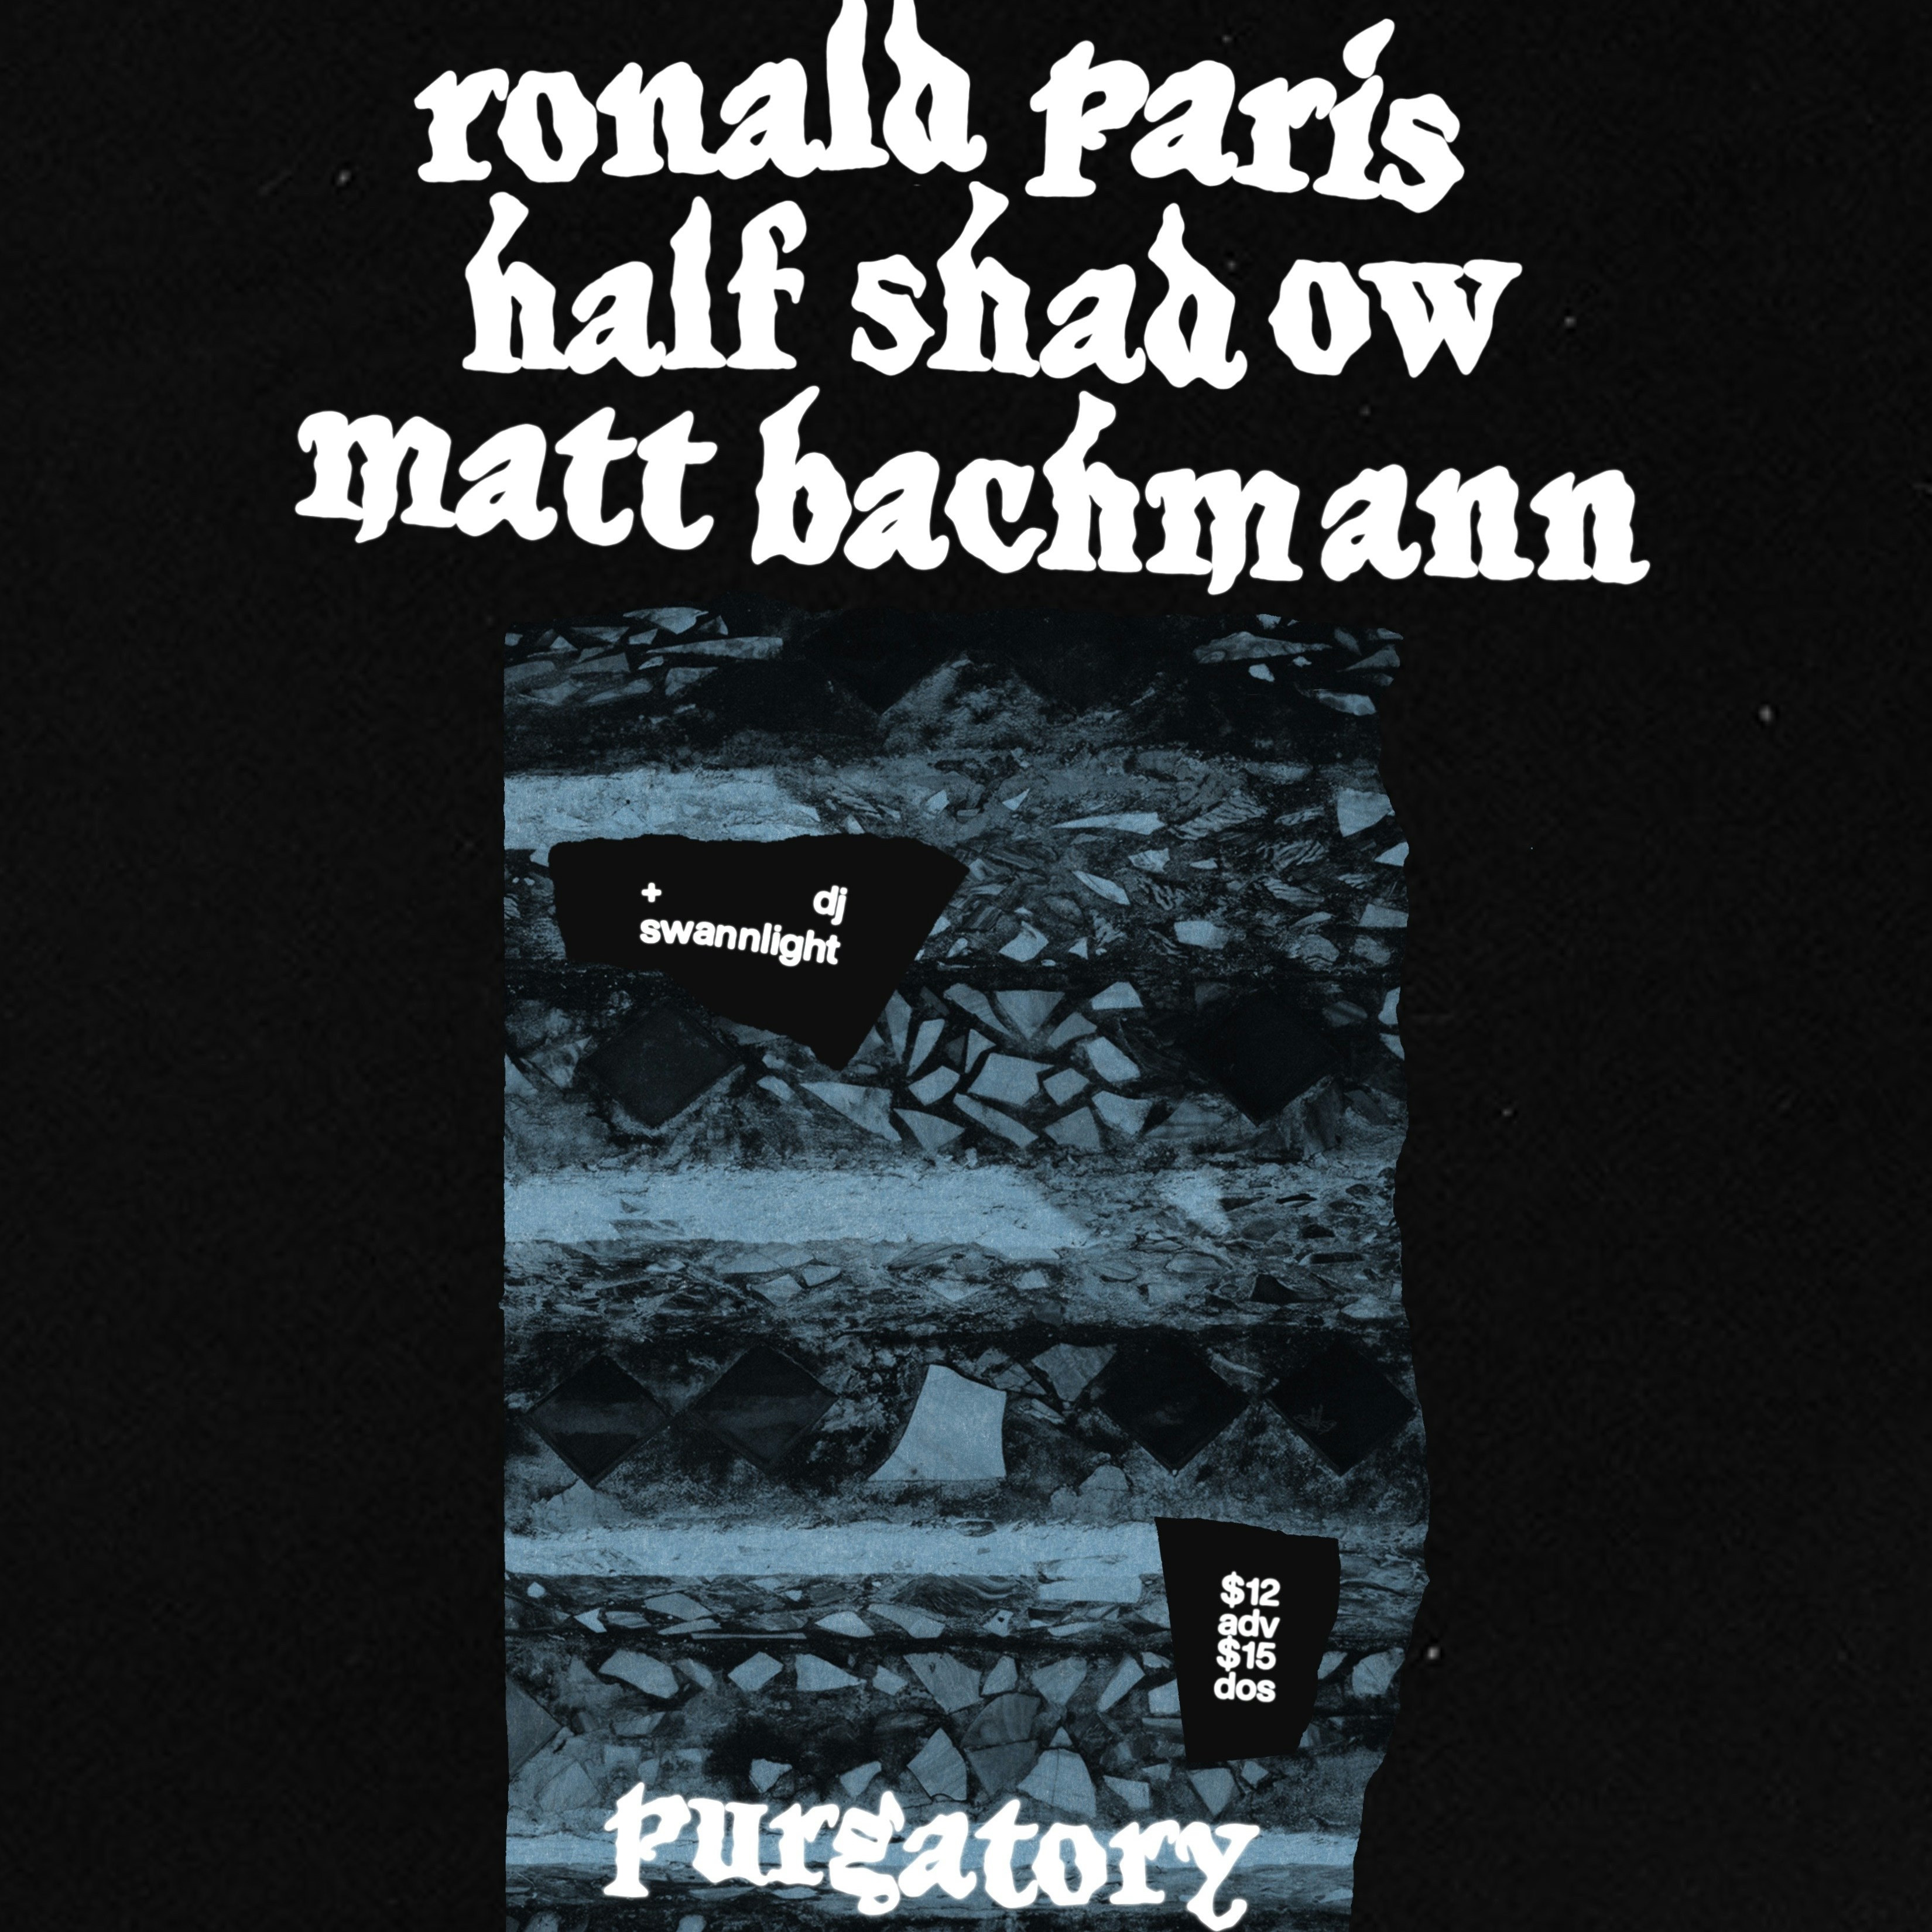 Ronald Paris, Half Shadow, Matt Bachmann